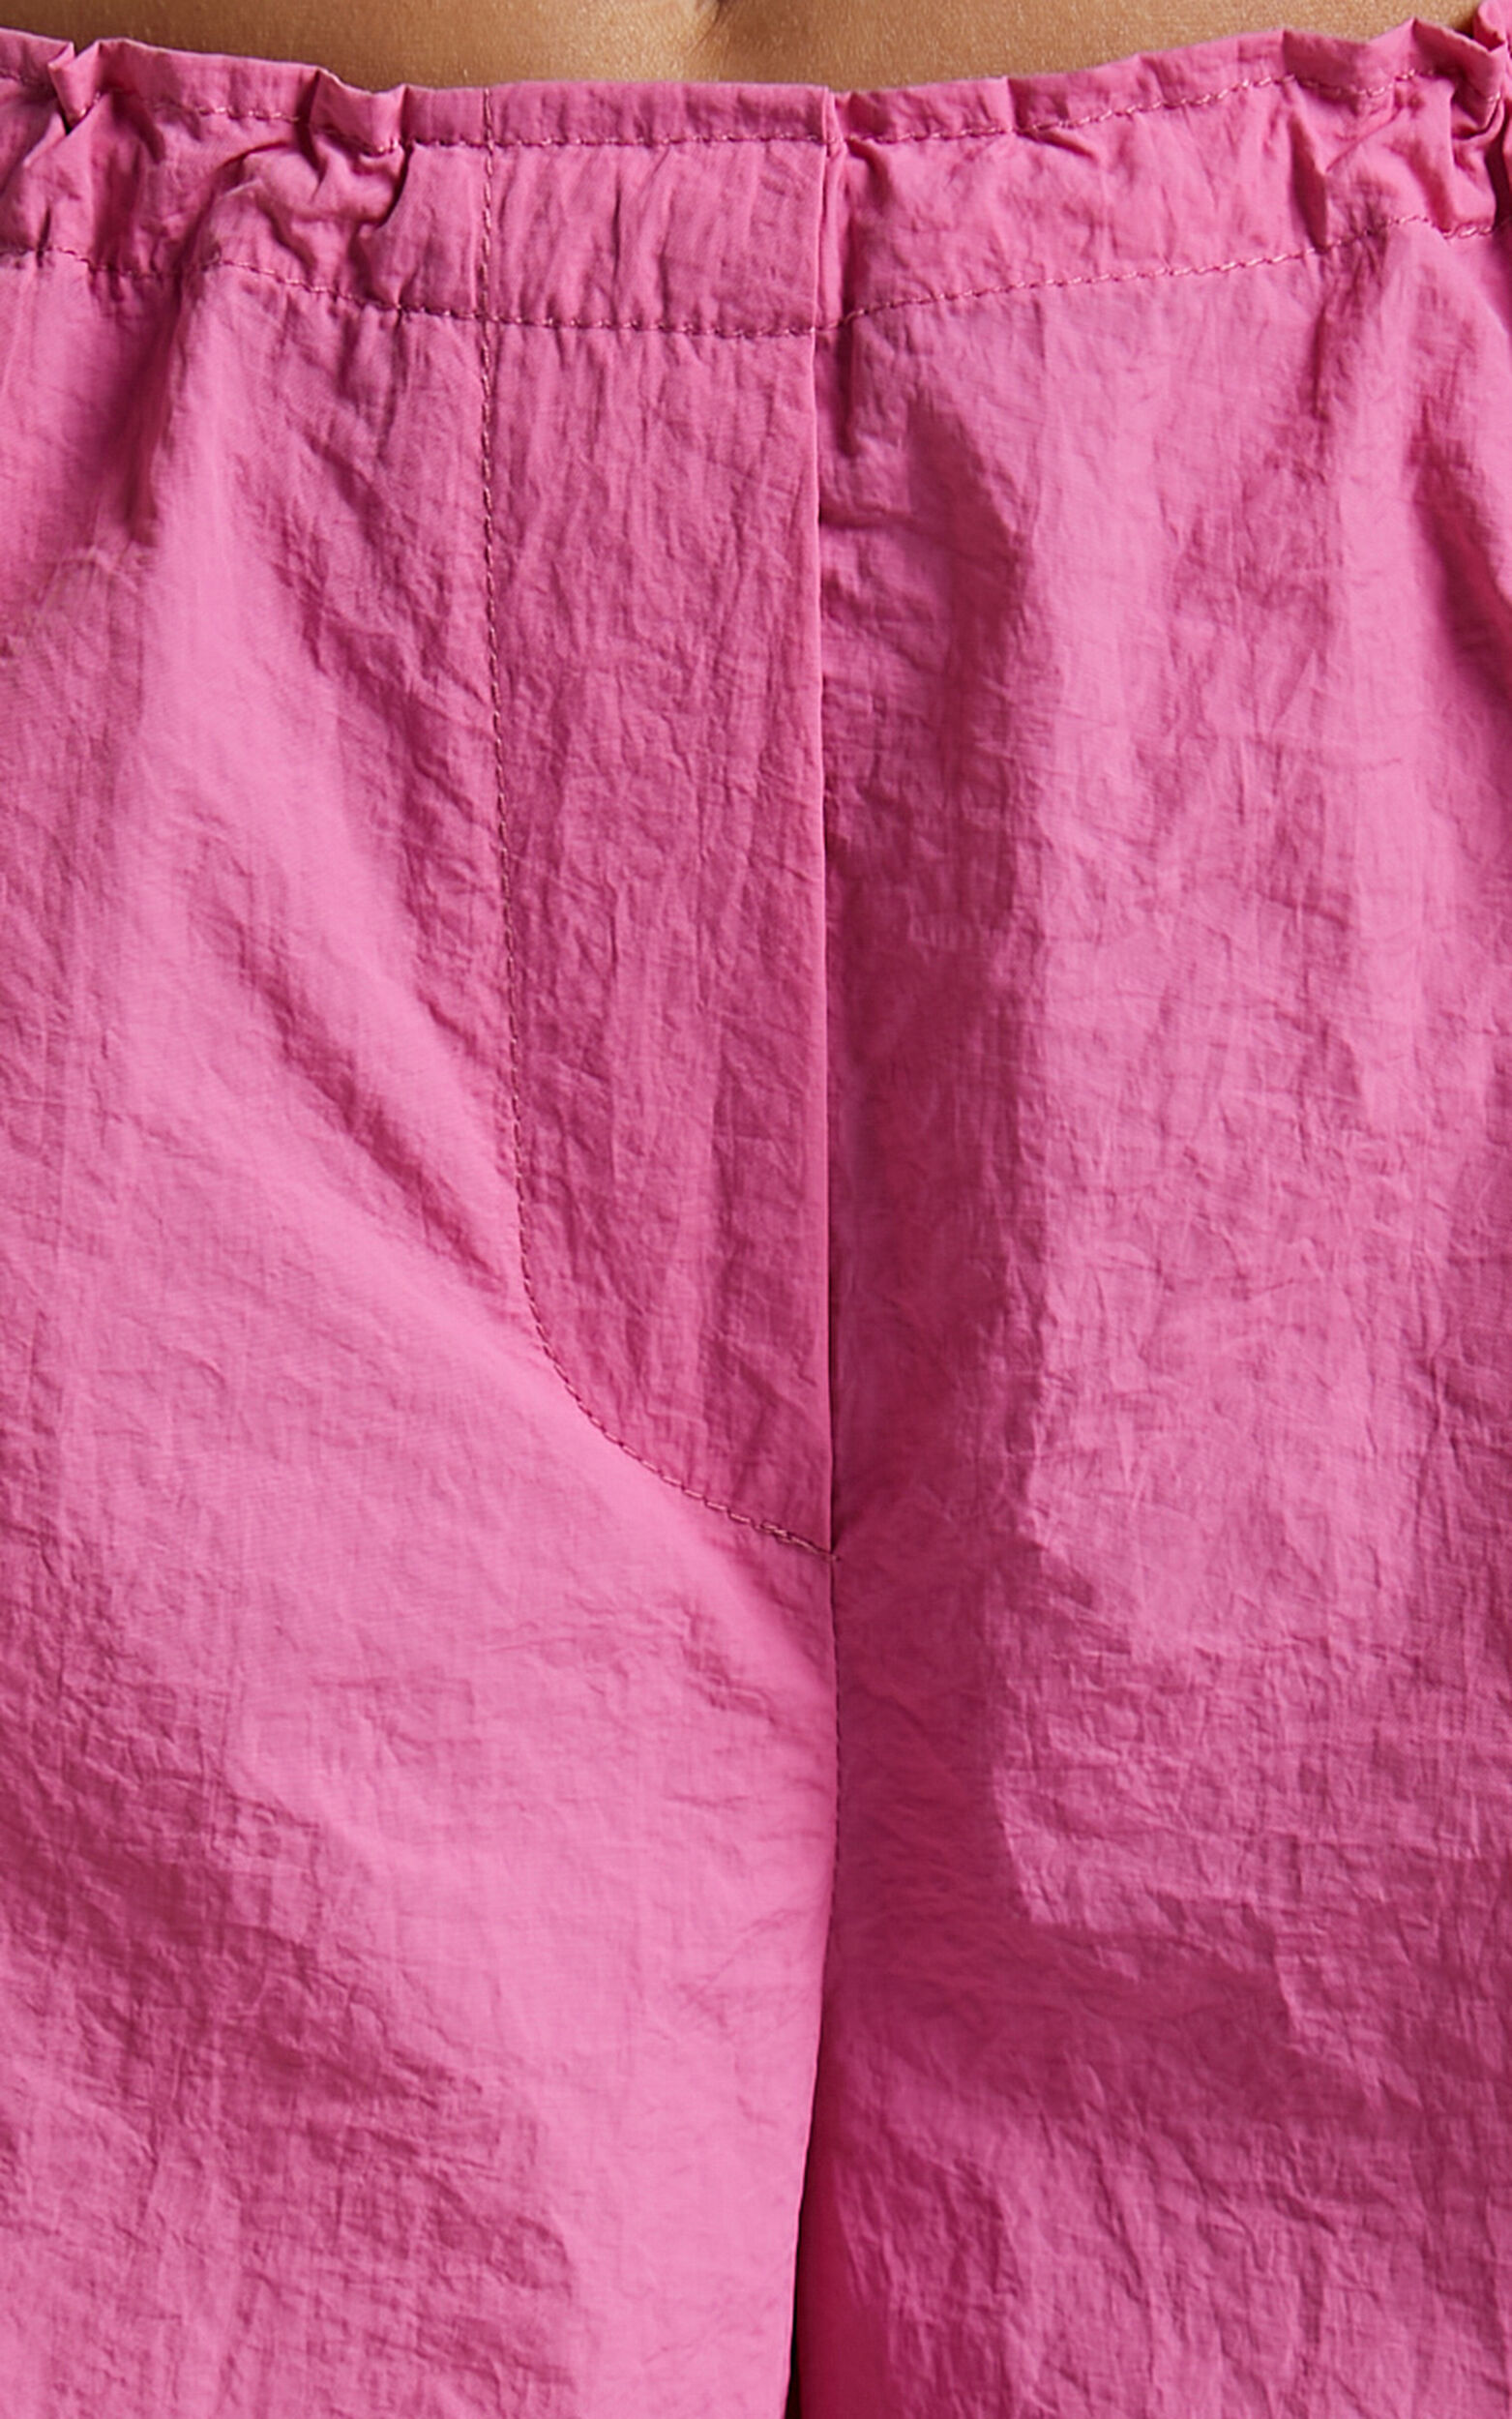 Utility Pants - Low Rise Parachute Pants in Candy Pink | Showpo